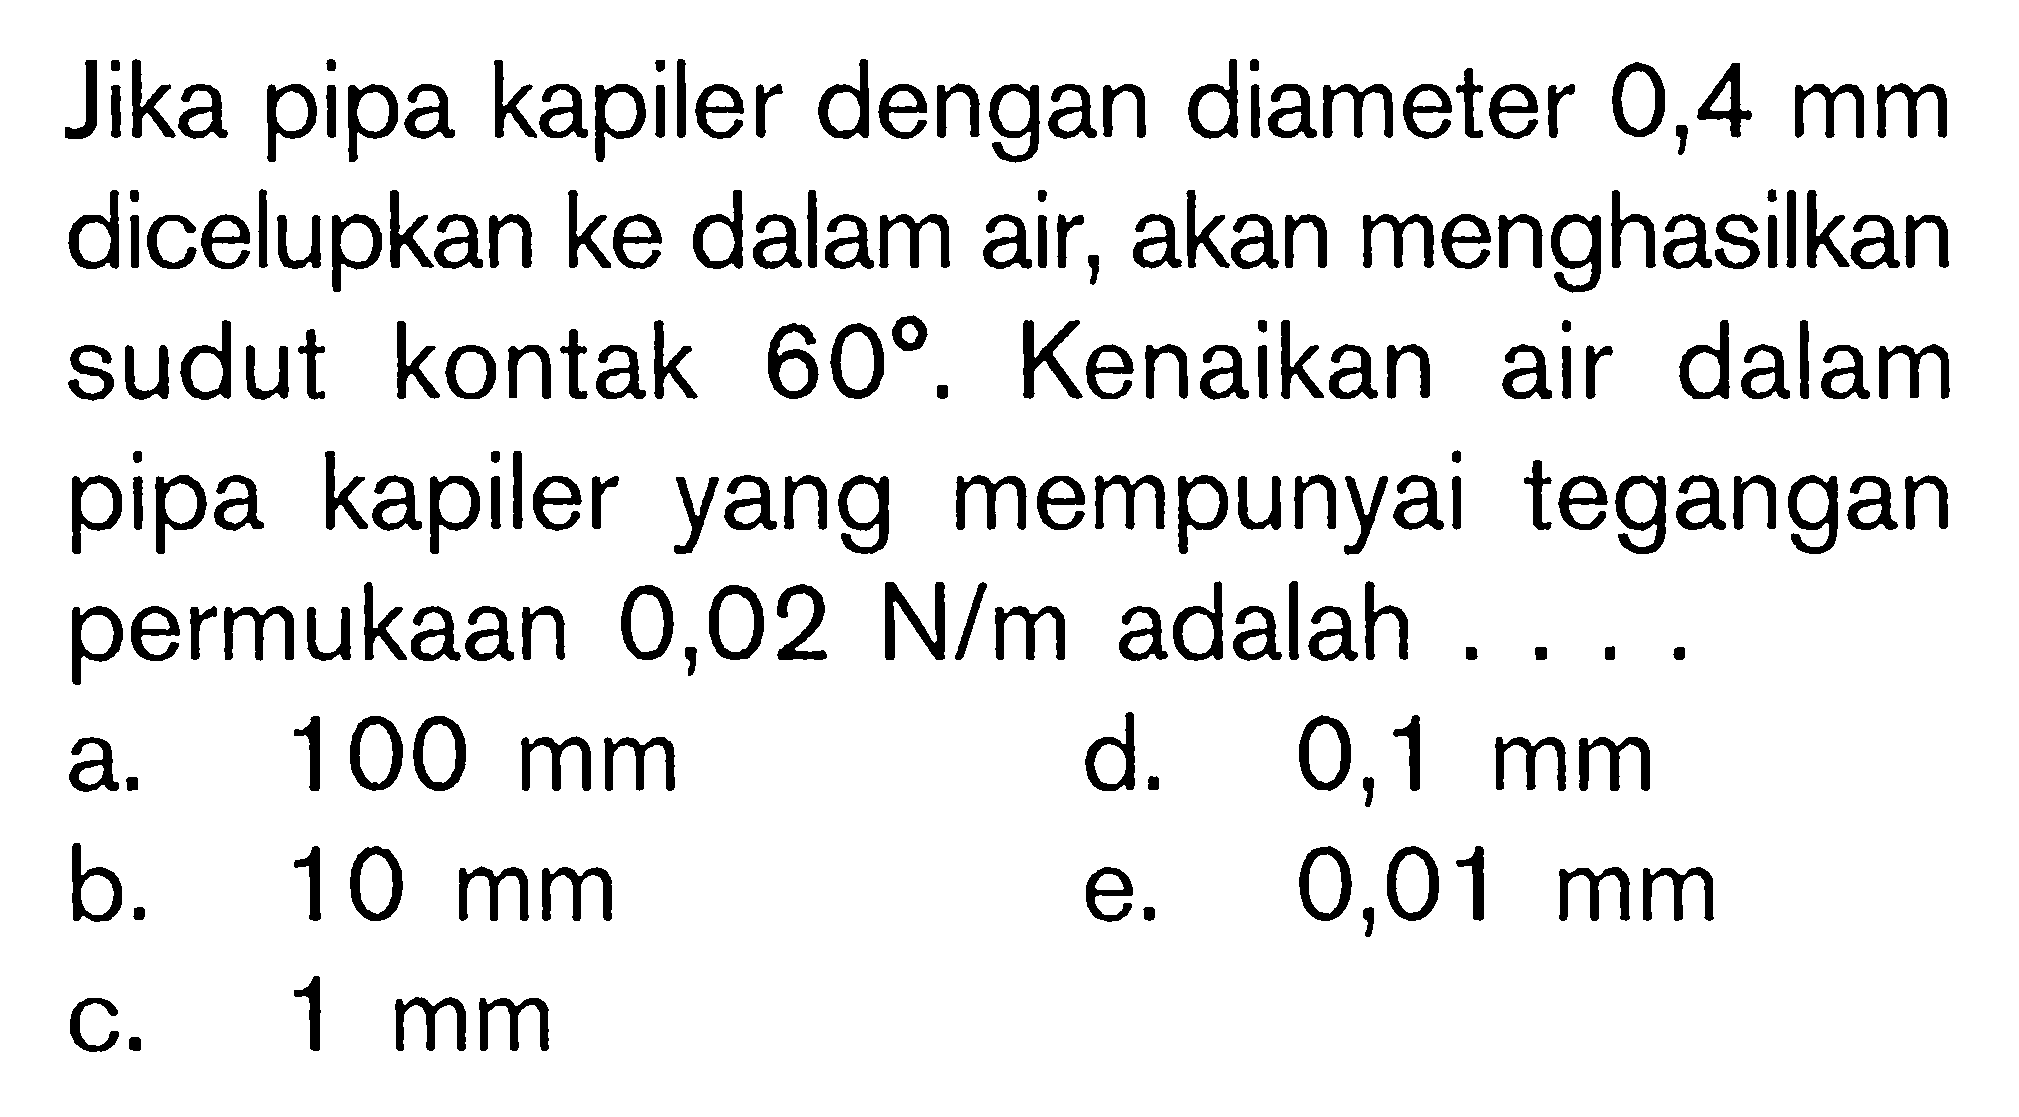 Jika pipa kapiler dengan diameter  0,4 mm  dicelupkan ke dalam air, akan menghasilkan sudut kontak 60. Kenaikan air dalam pipa kapiler yang mempunyai tegangan permukaan  0,02 N/m  adalah .... 
